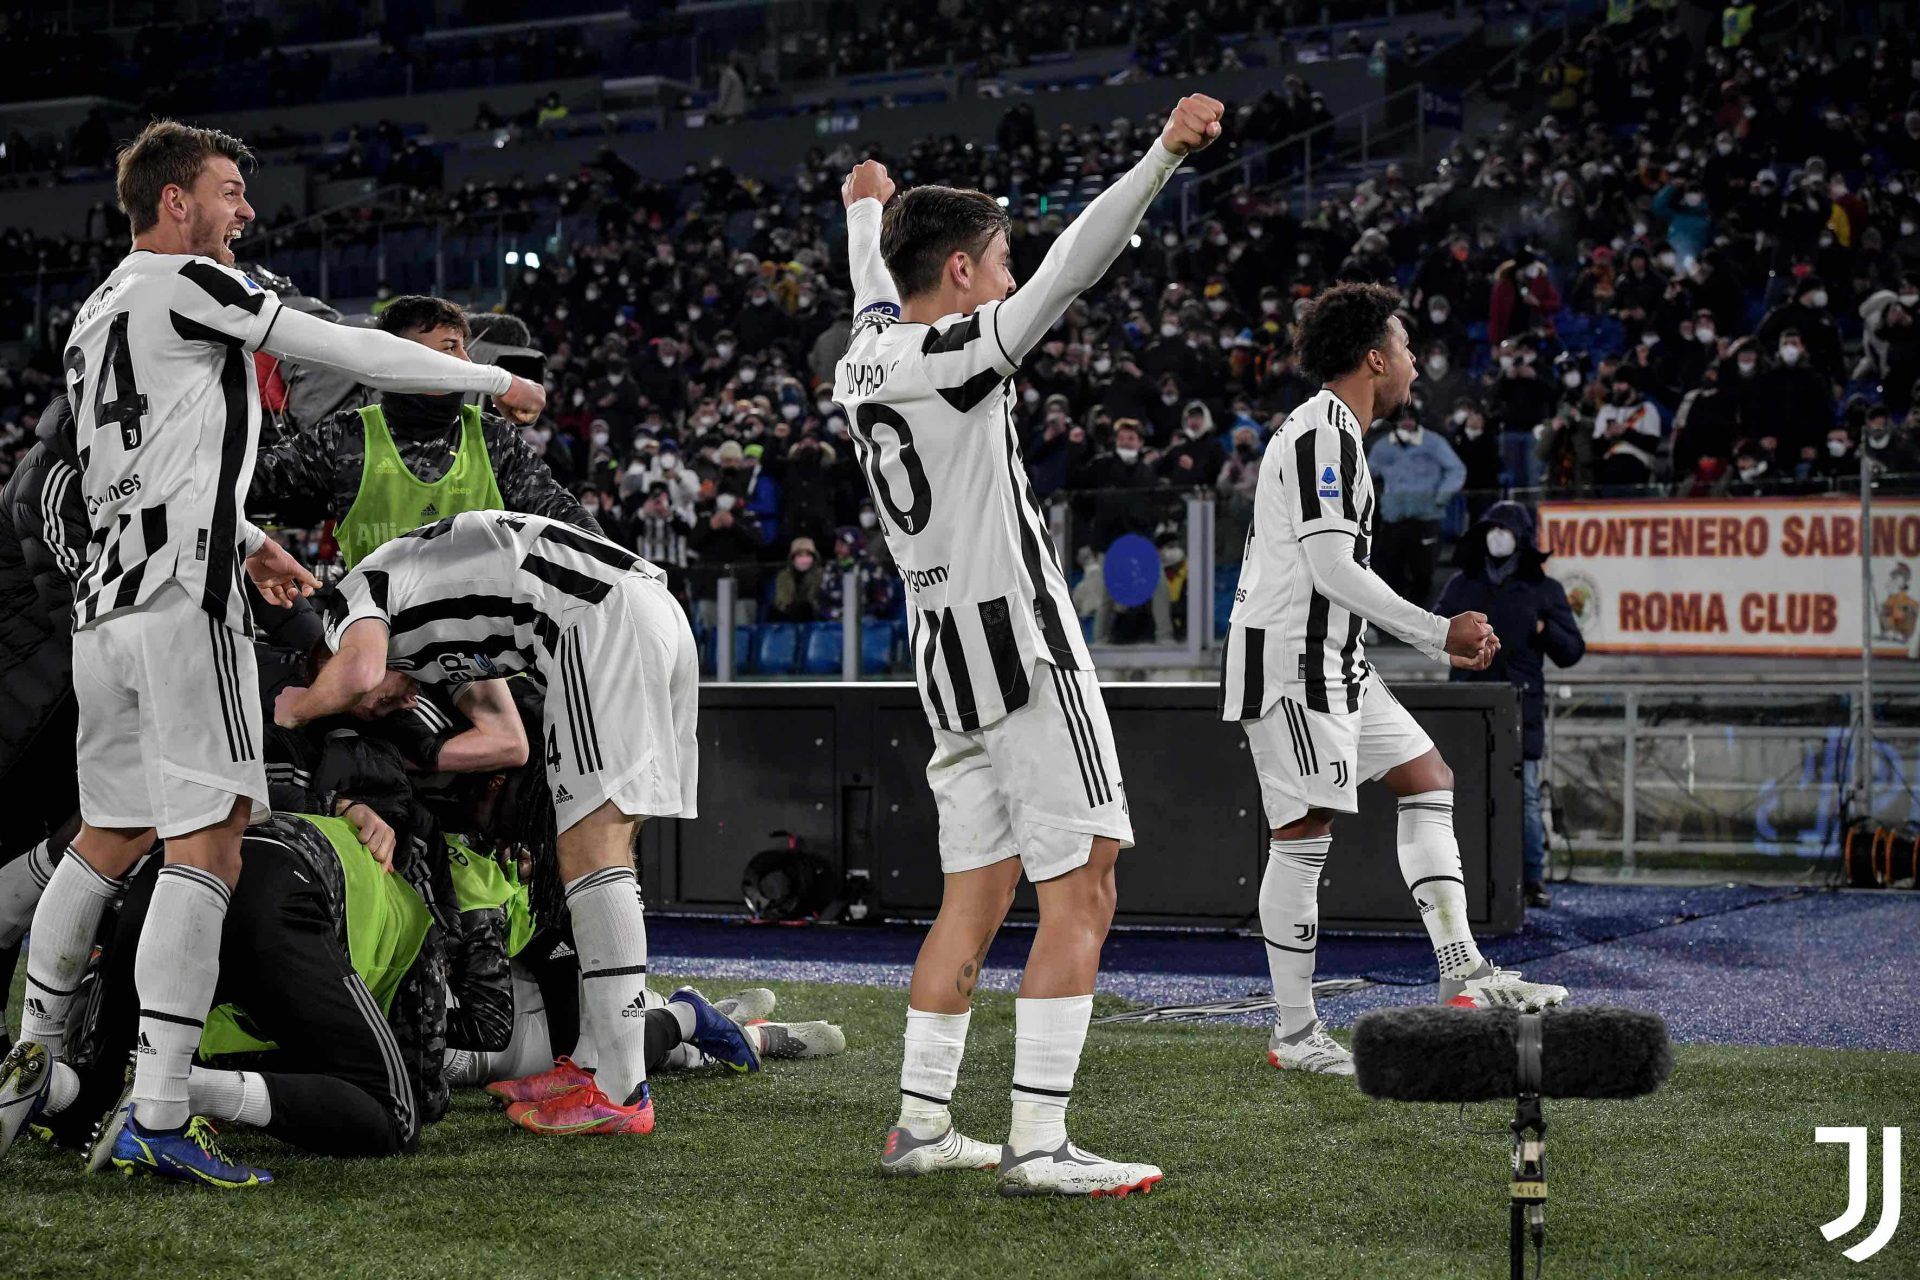 Vídeo: Juventus firma espectacular remontada en ocho minutos ante la Roma